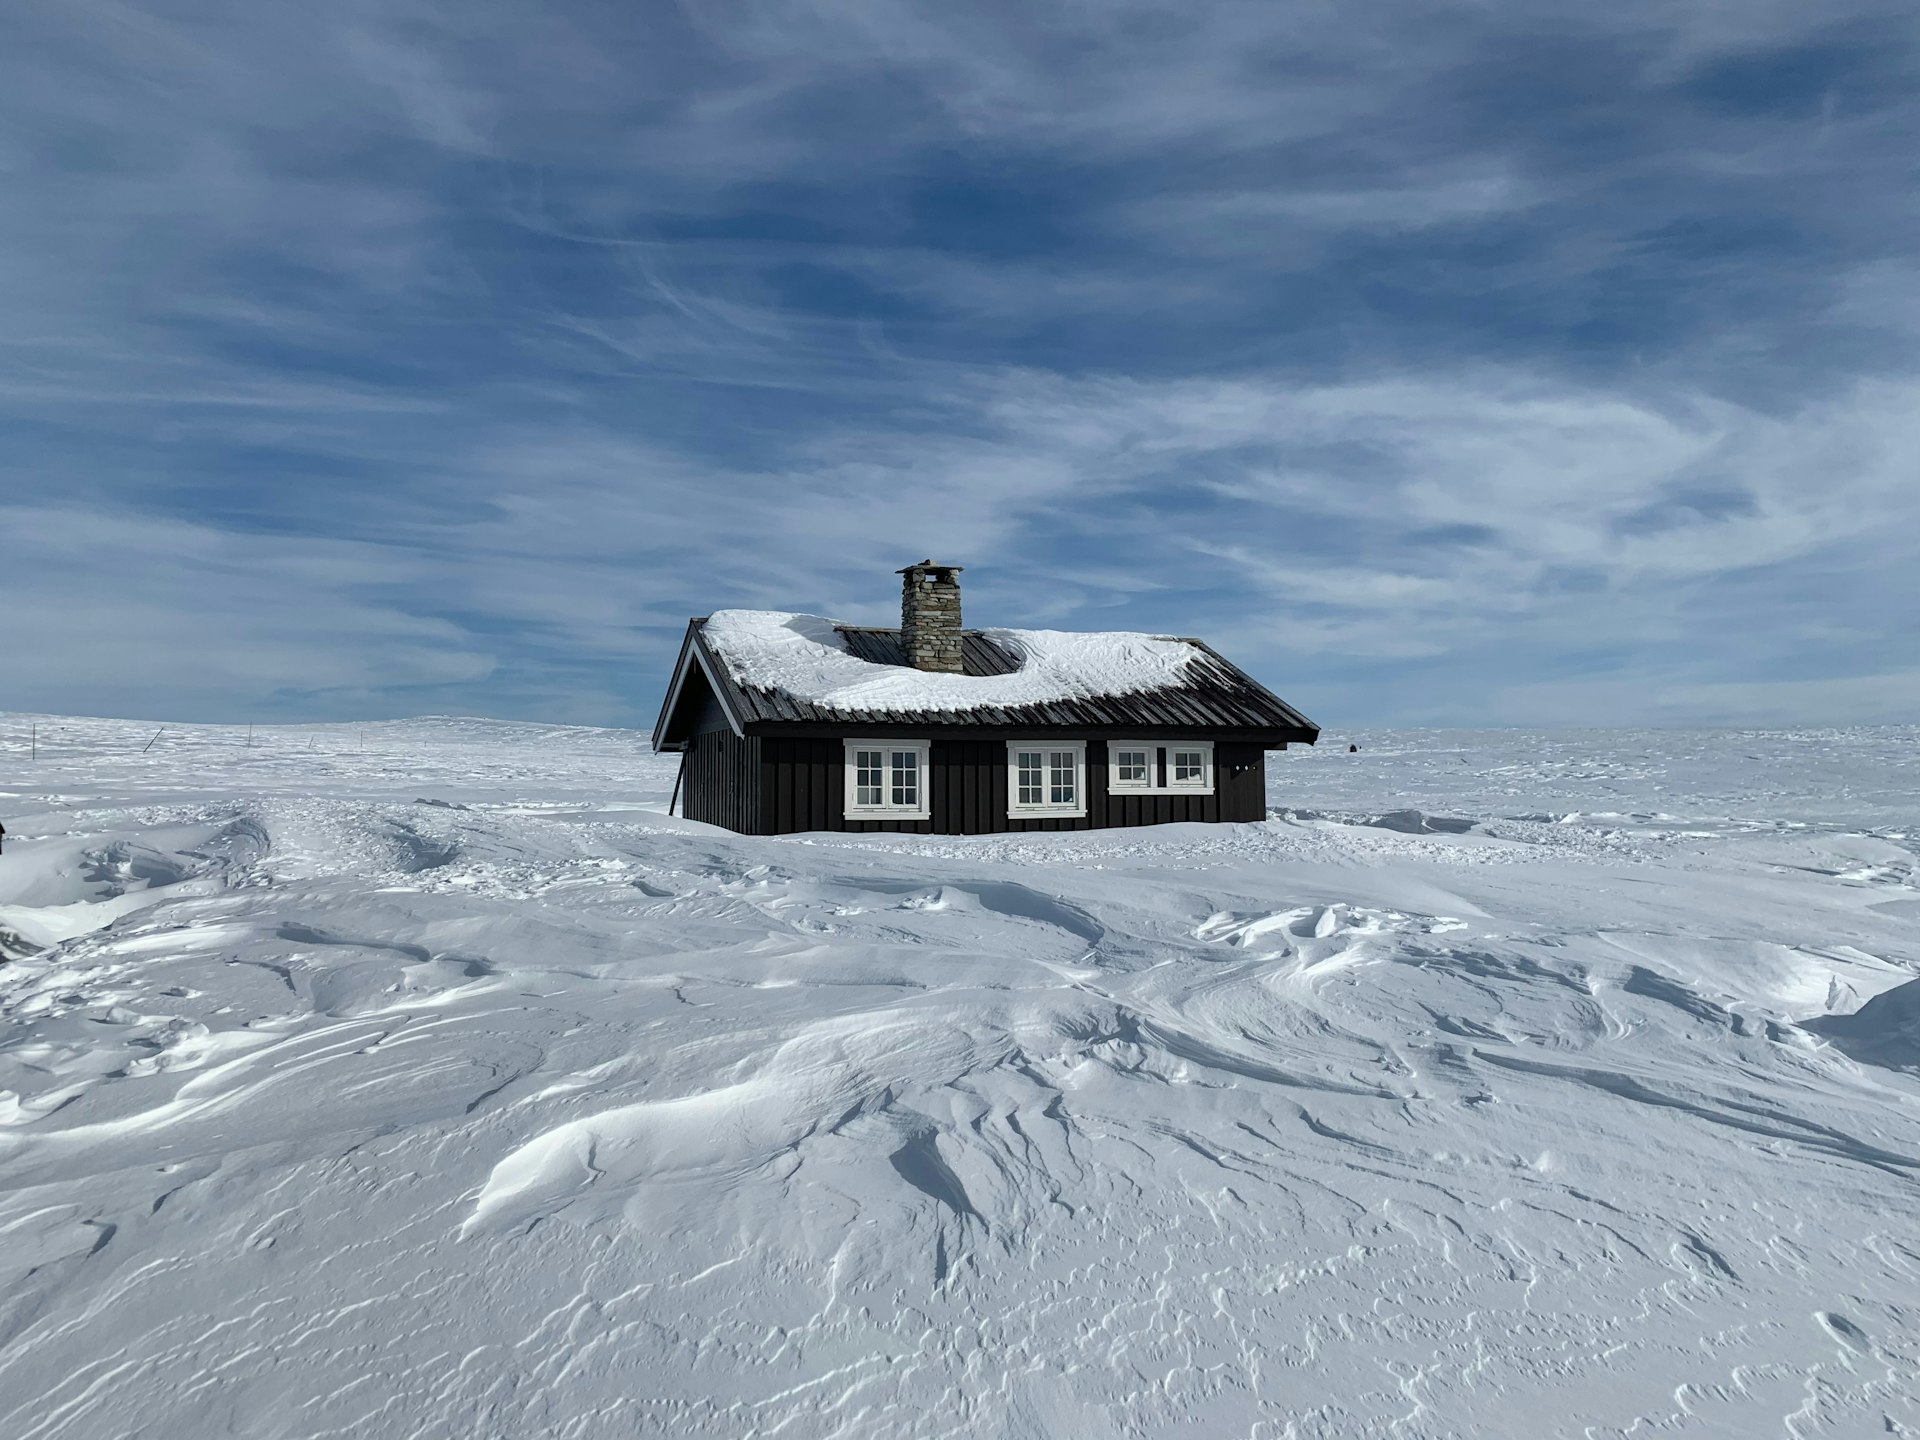 DNT hut in Rondane National Park